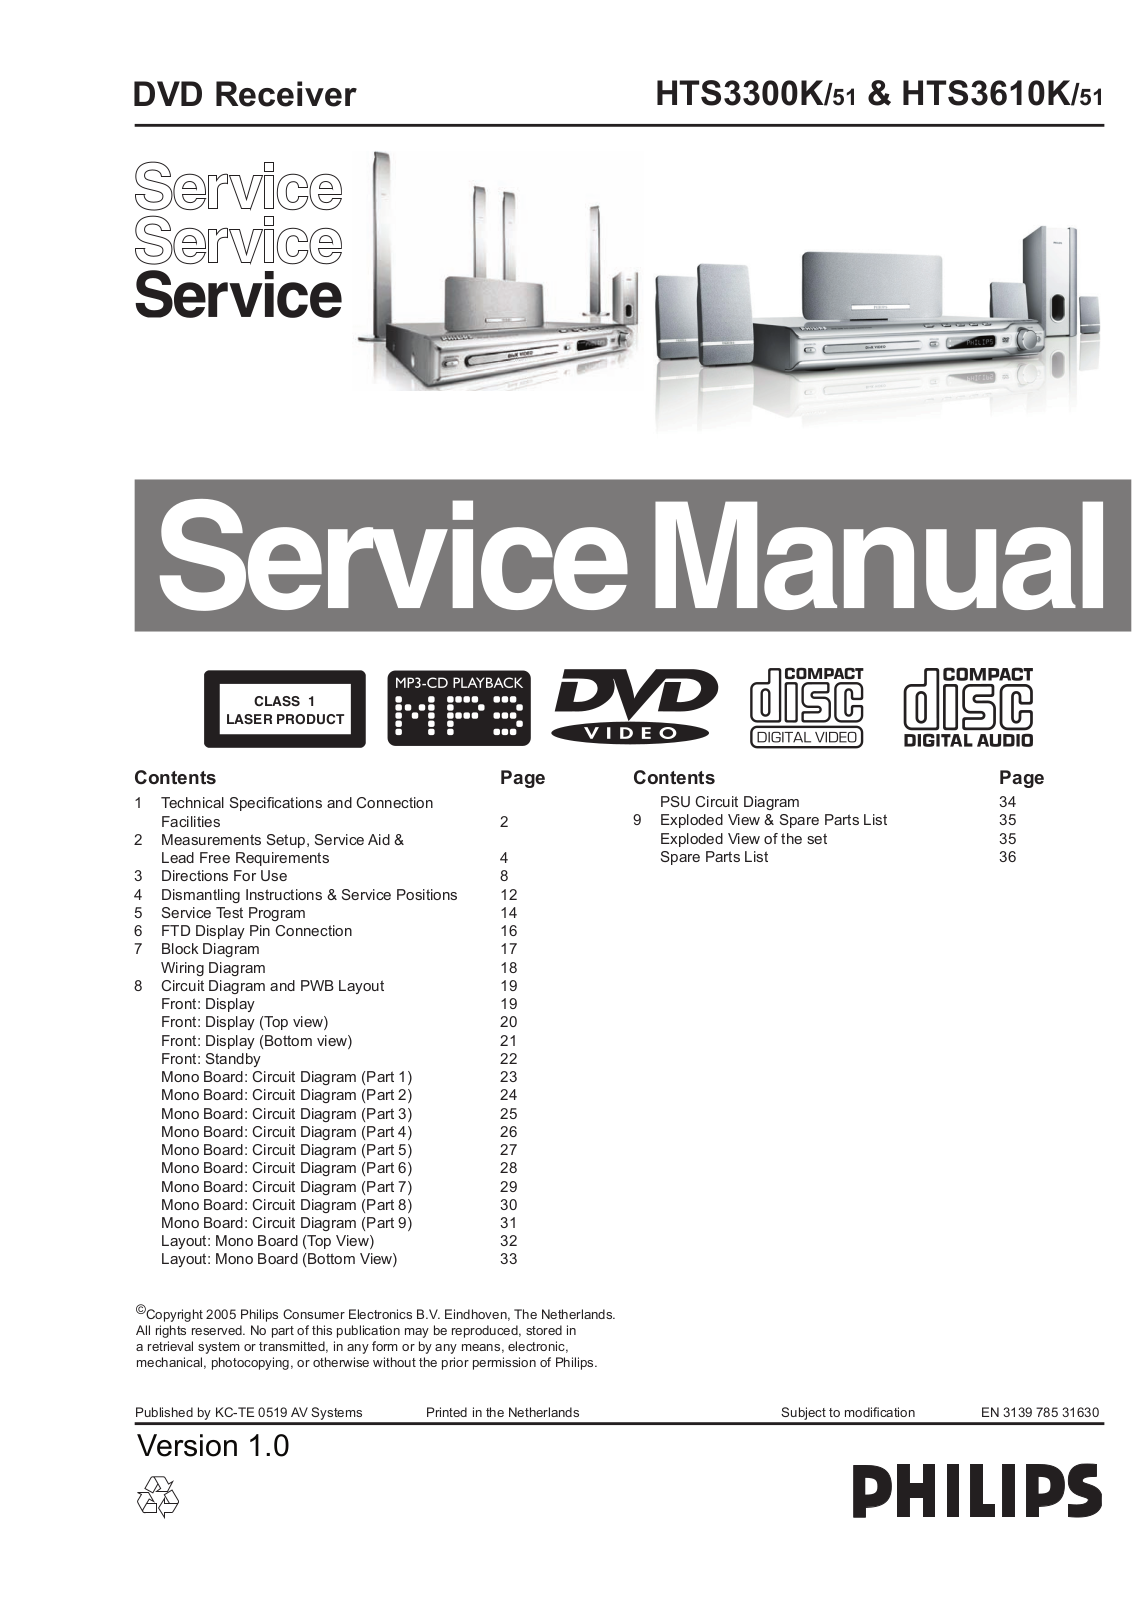 Philips HTS-3610-K, HTS-3300-K Service Manual